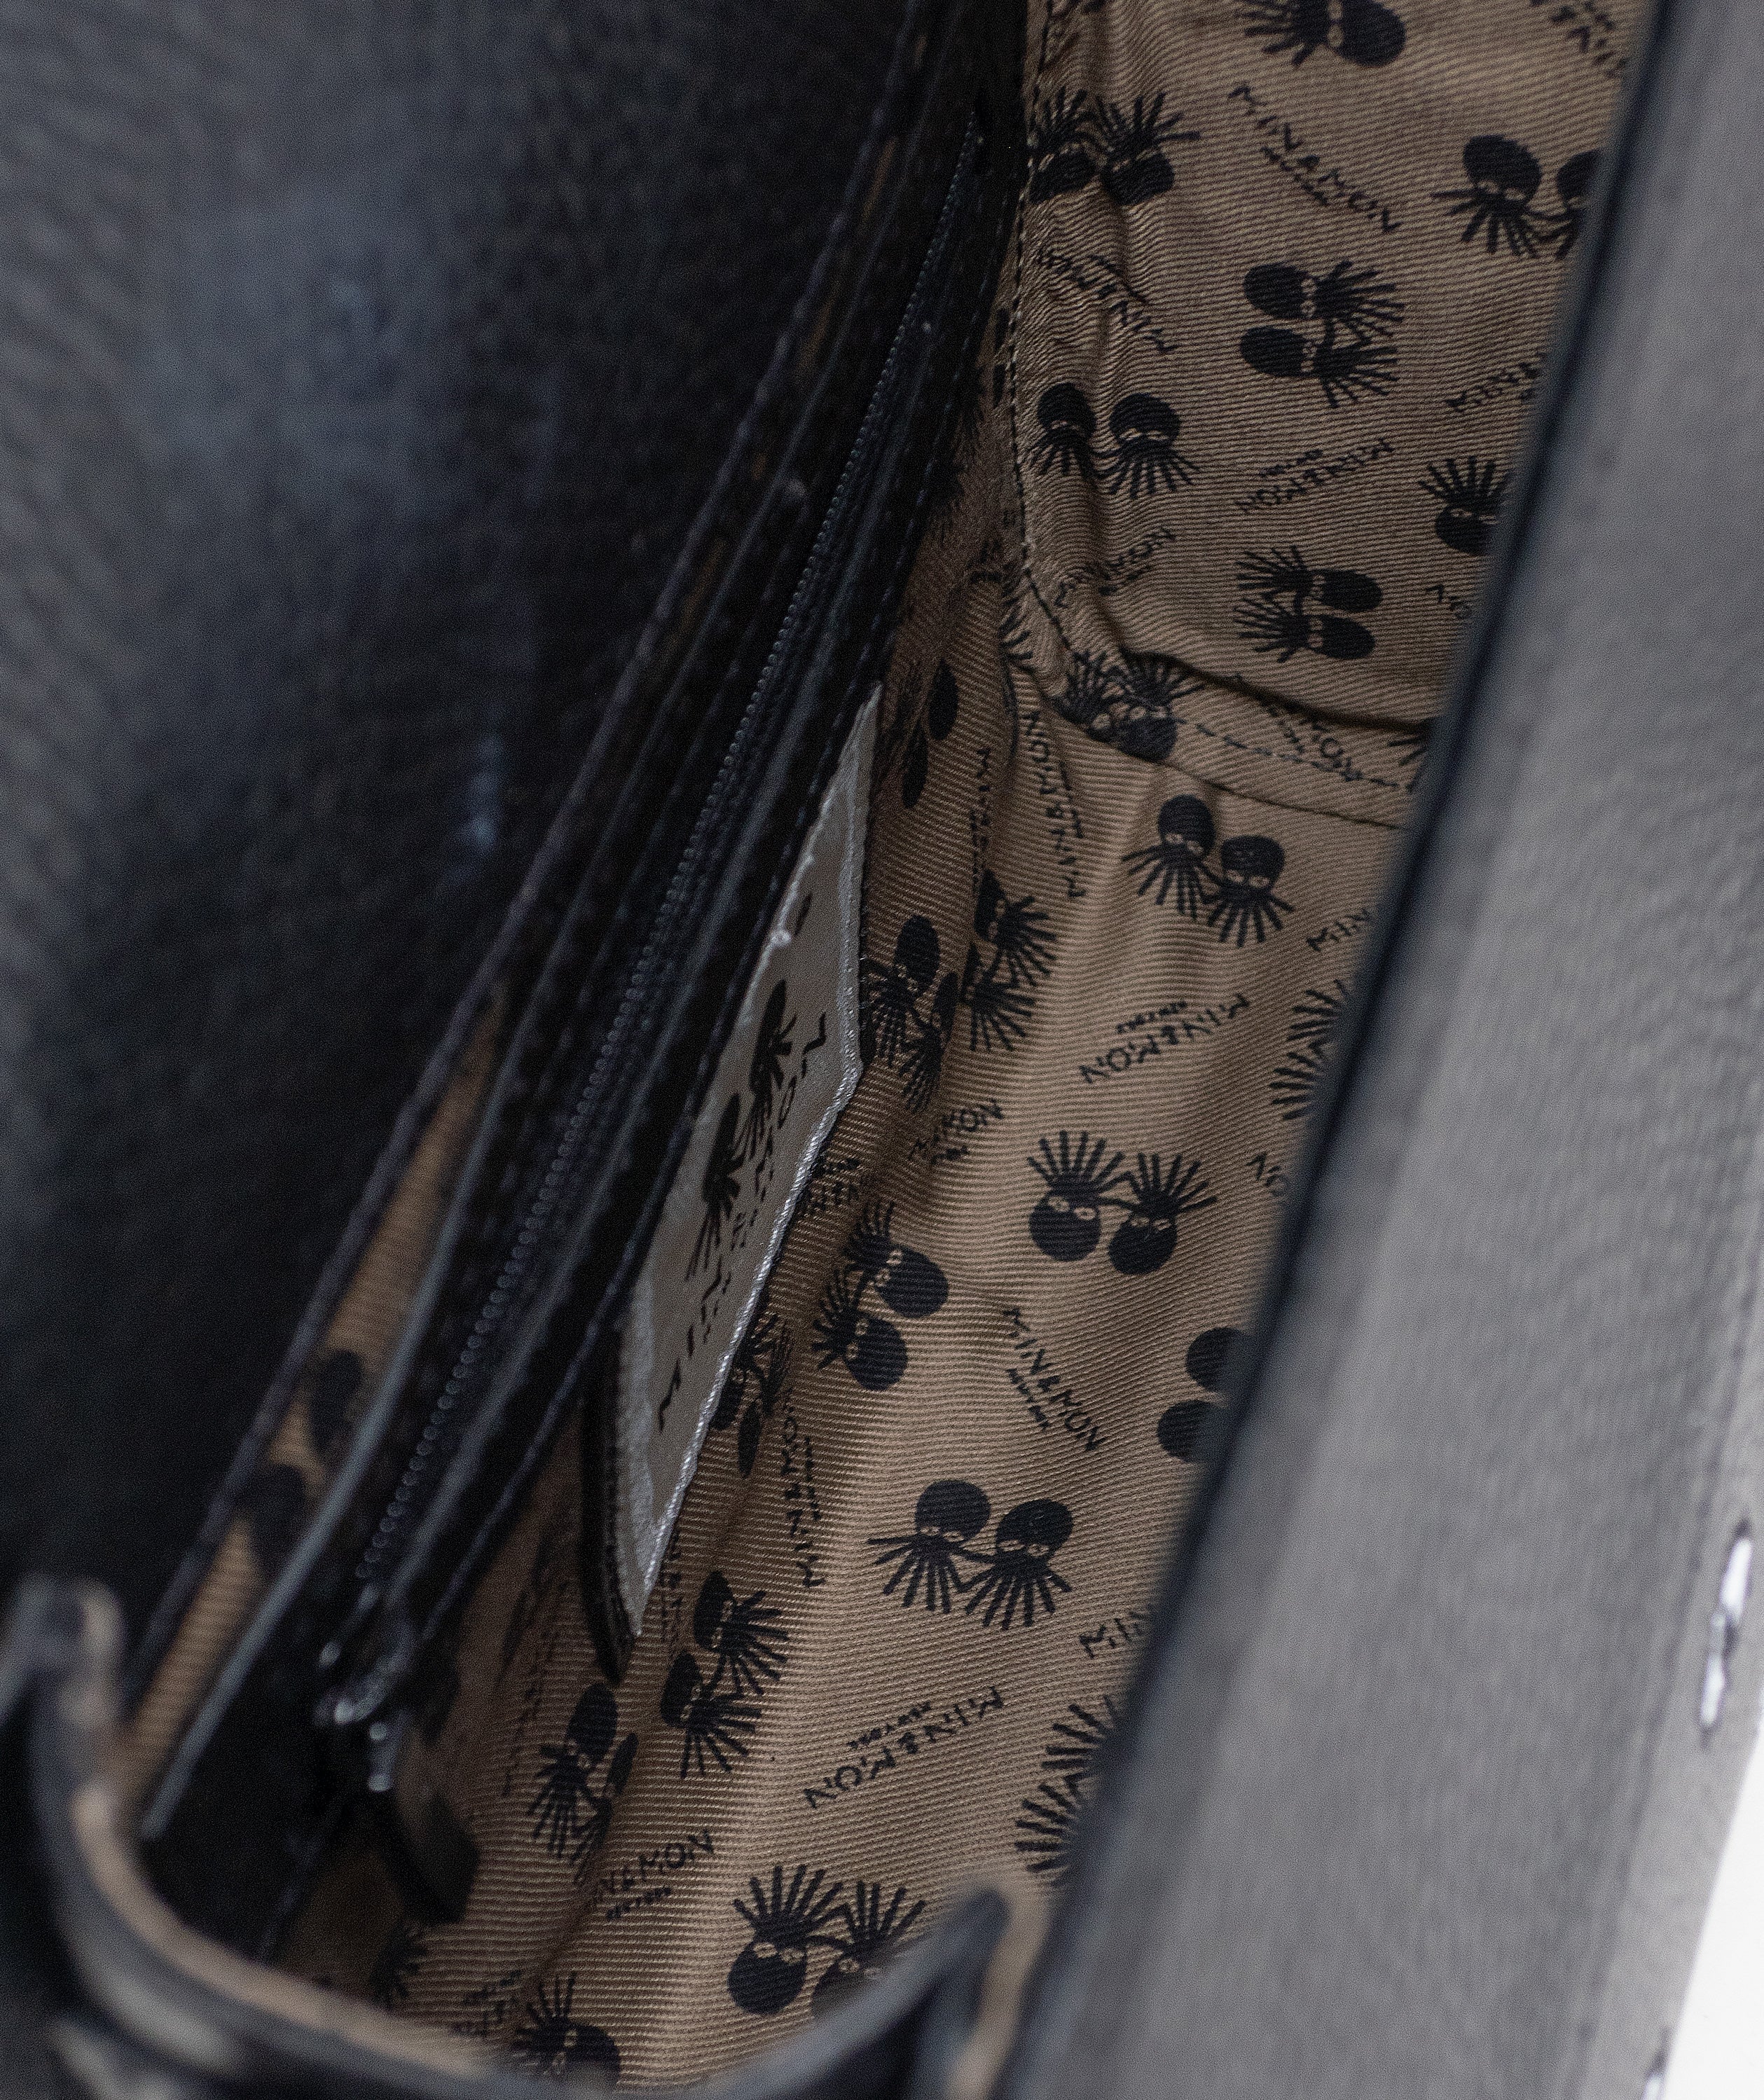 Anastasio Mini Crossbody Handbag Black Leather - All Over Eyes Embroidery - Inside view